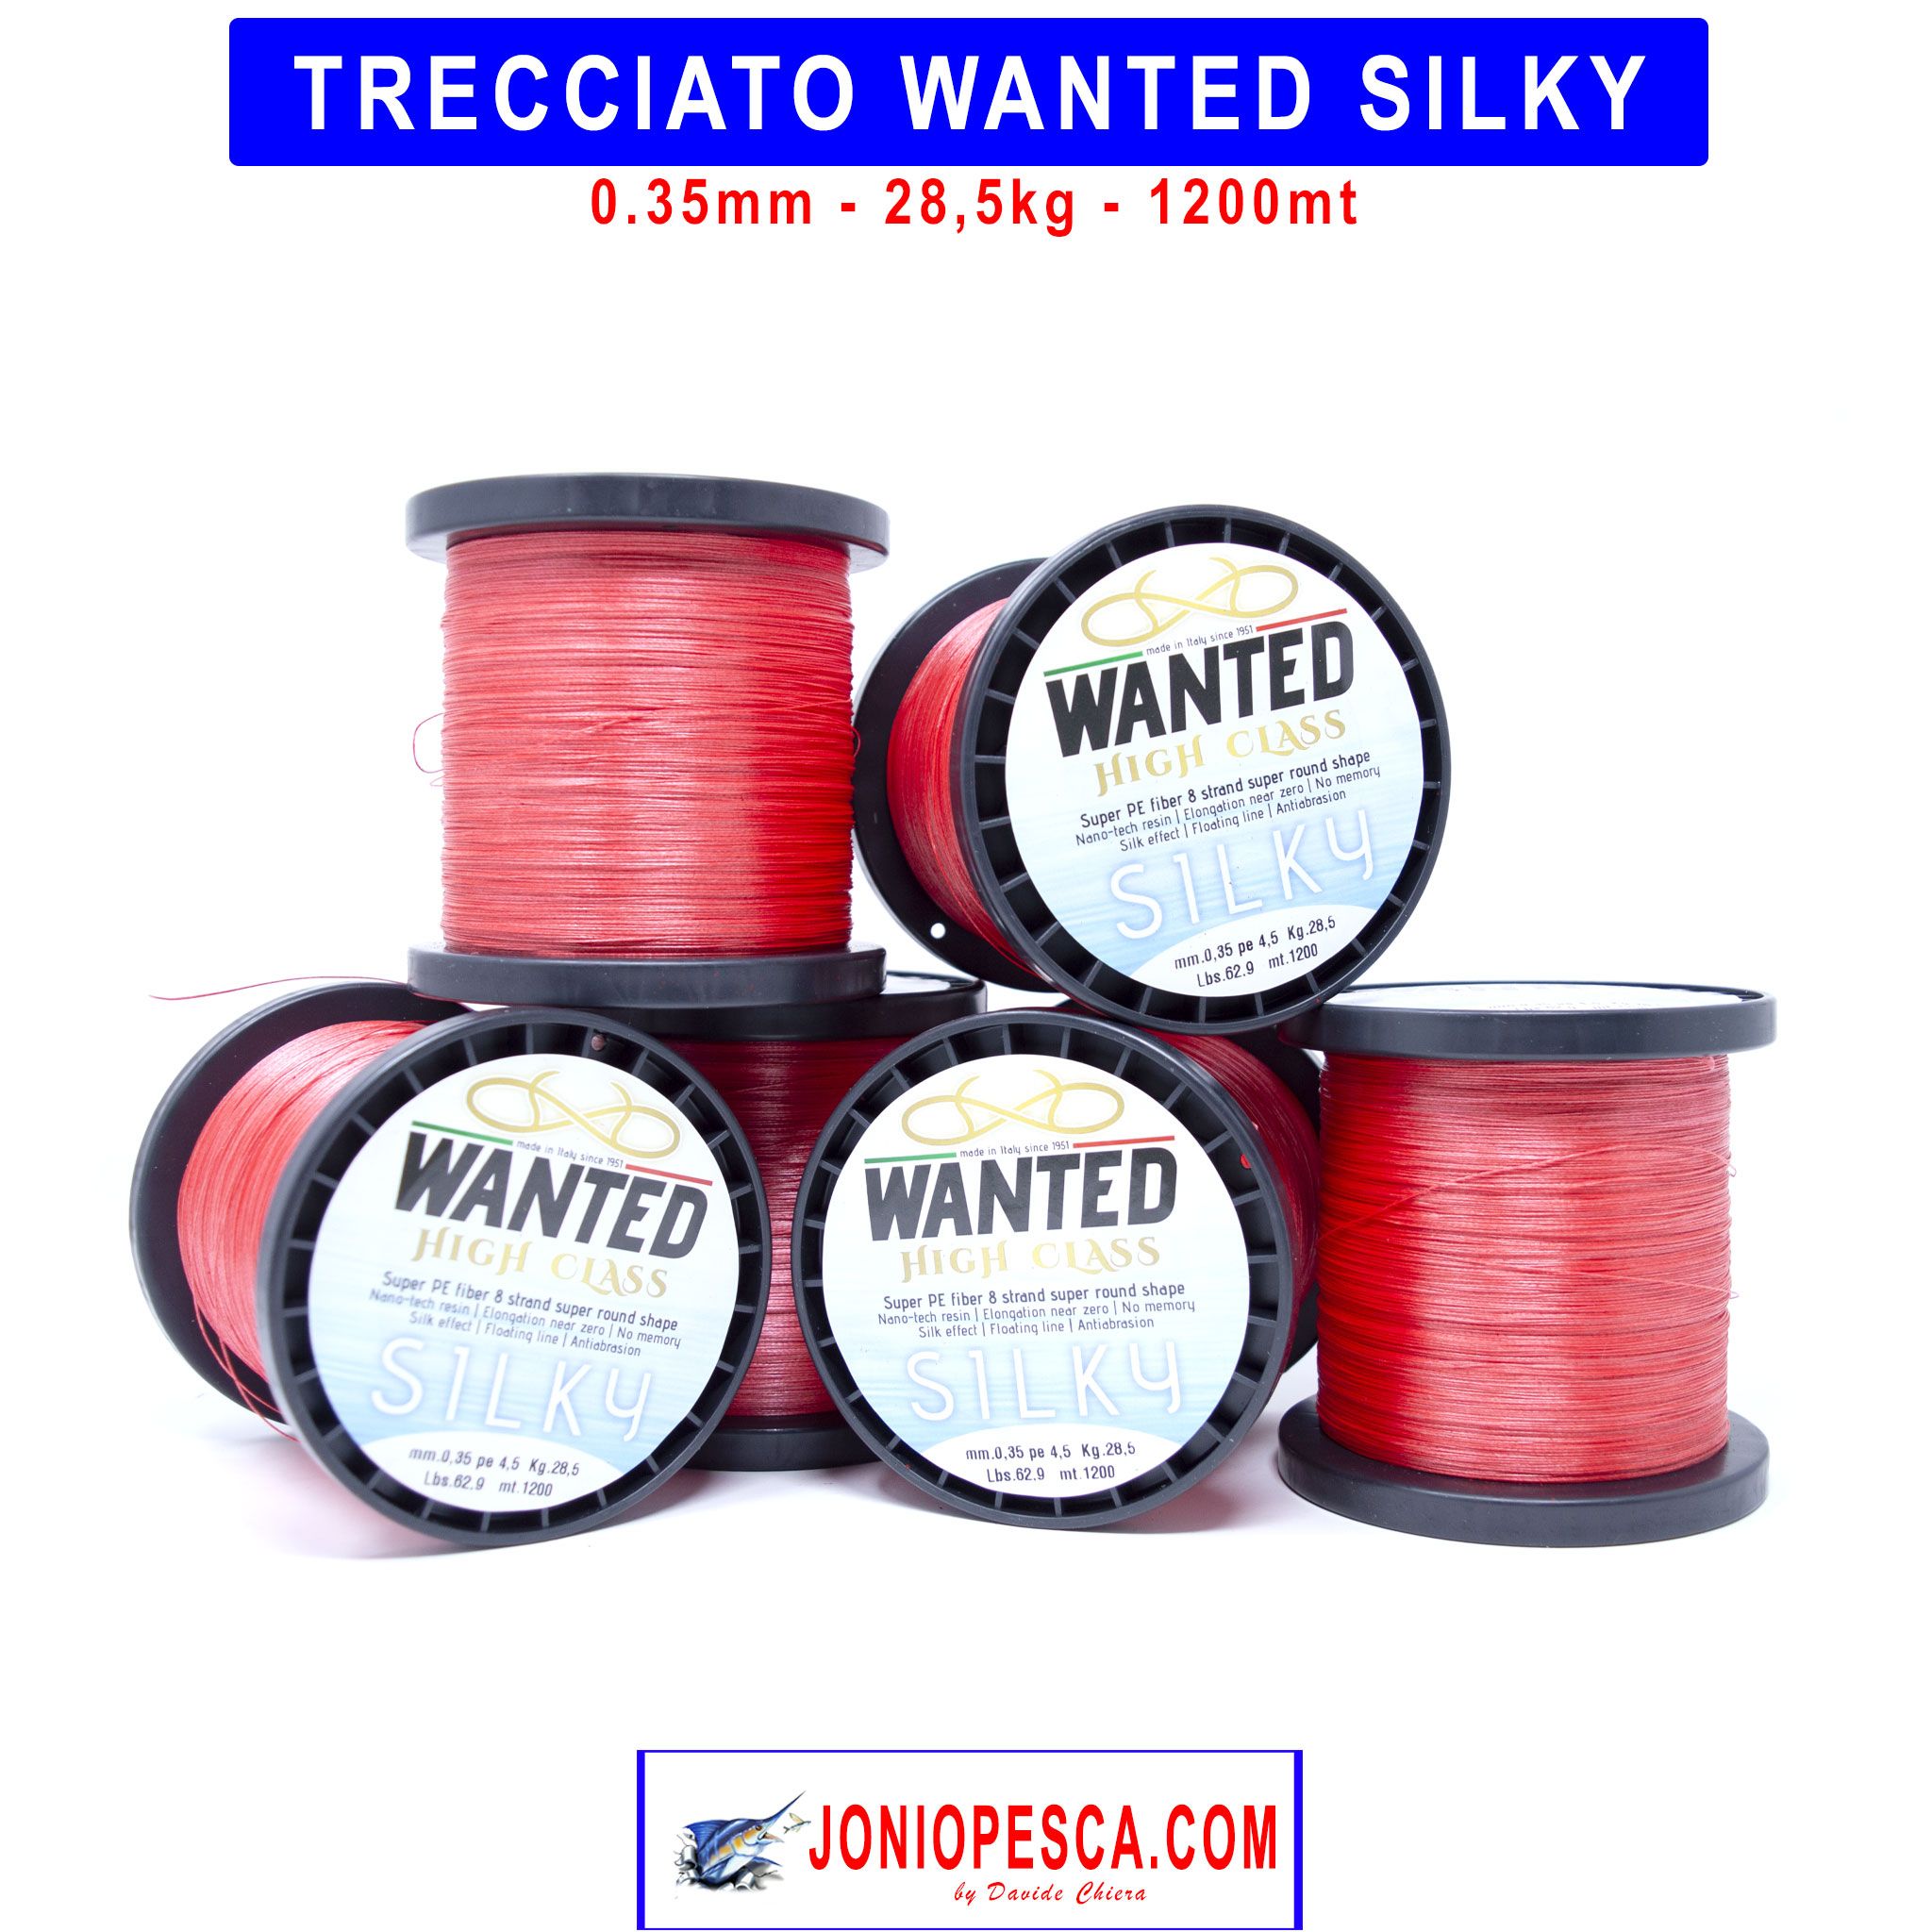 trecciato-wanted-silky-1200mt